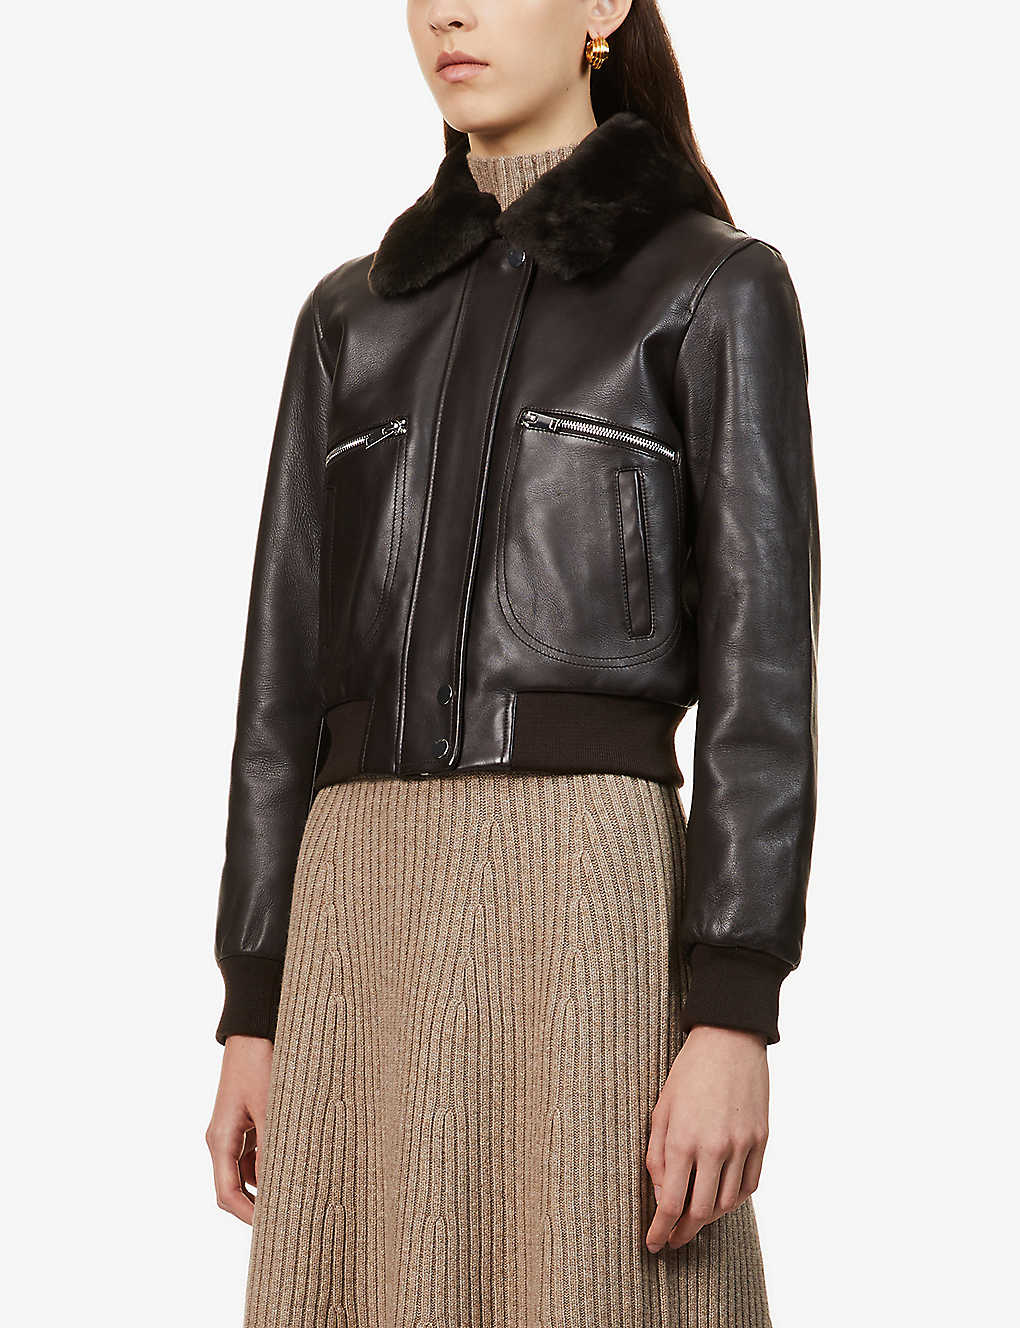 Shorty shearling and leather jacket Selfridges & Co Women Clothing Jackets Leather Jackets 